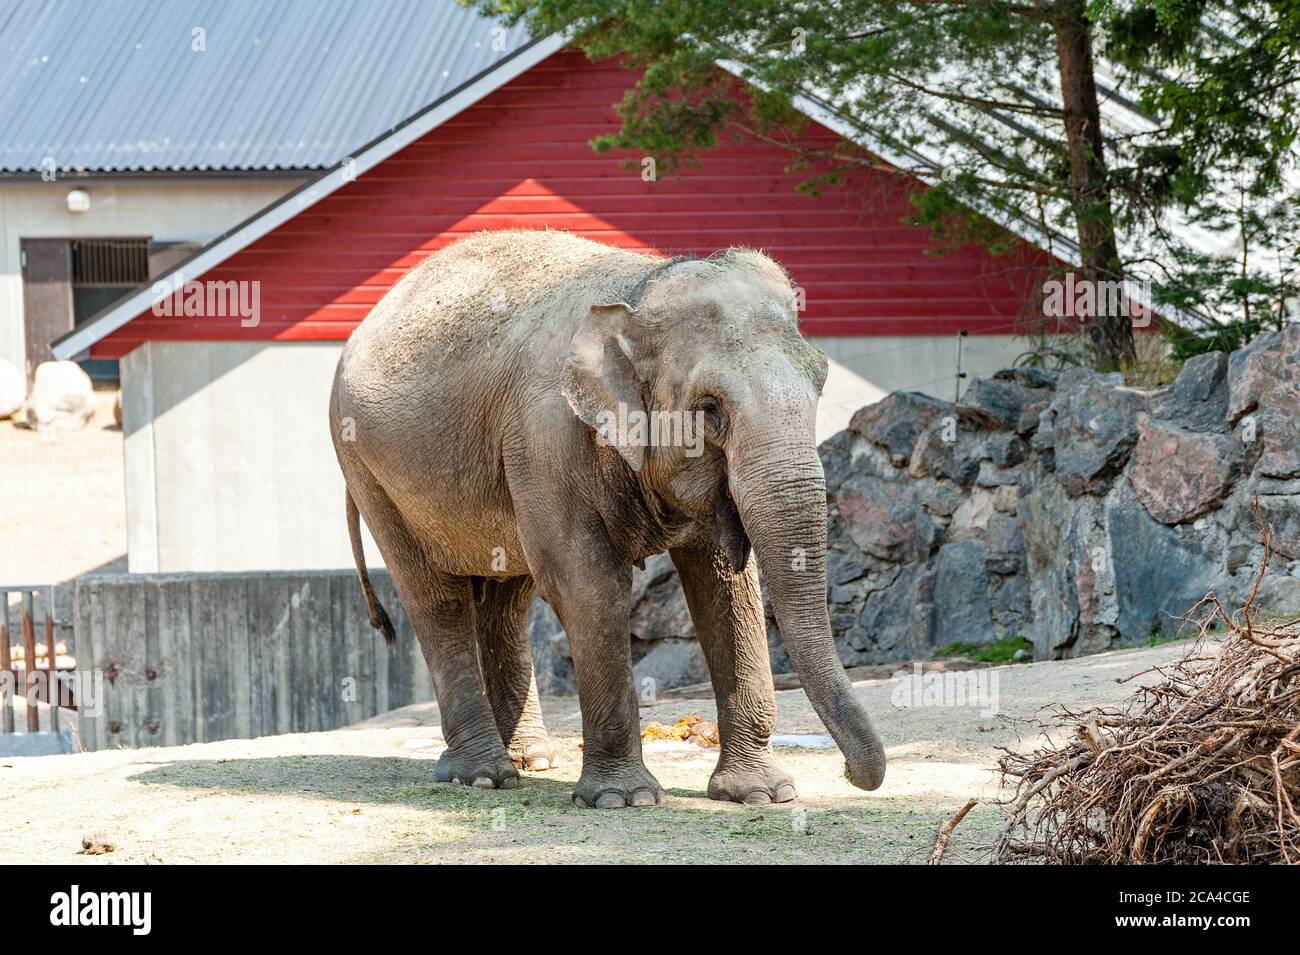 The Asian elephant (Elephas maximus). Stock Photo